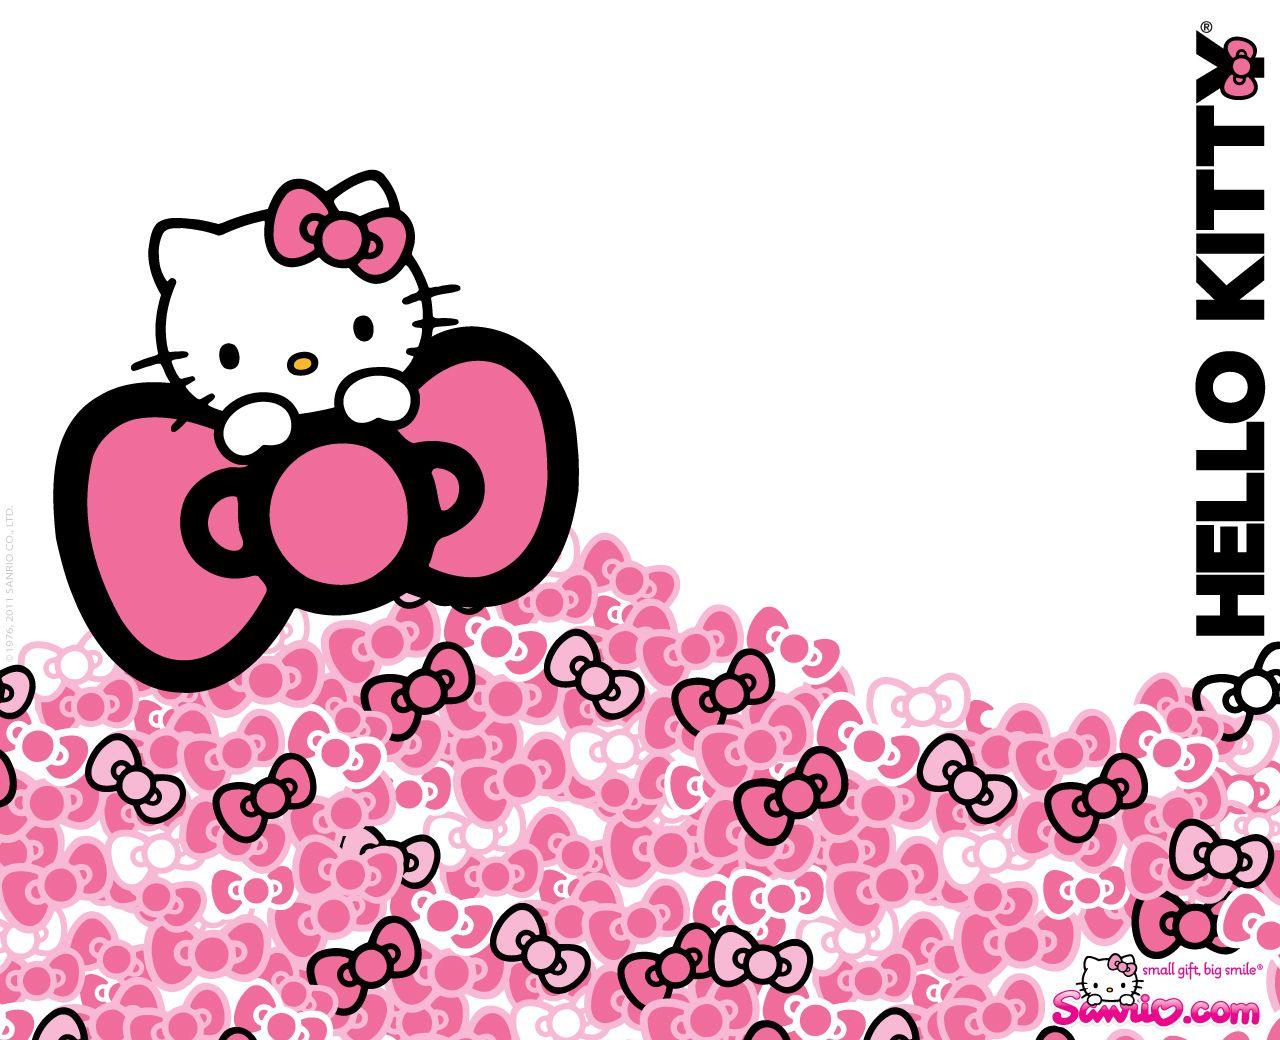 Free Hello Kitty Wallpaper